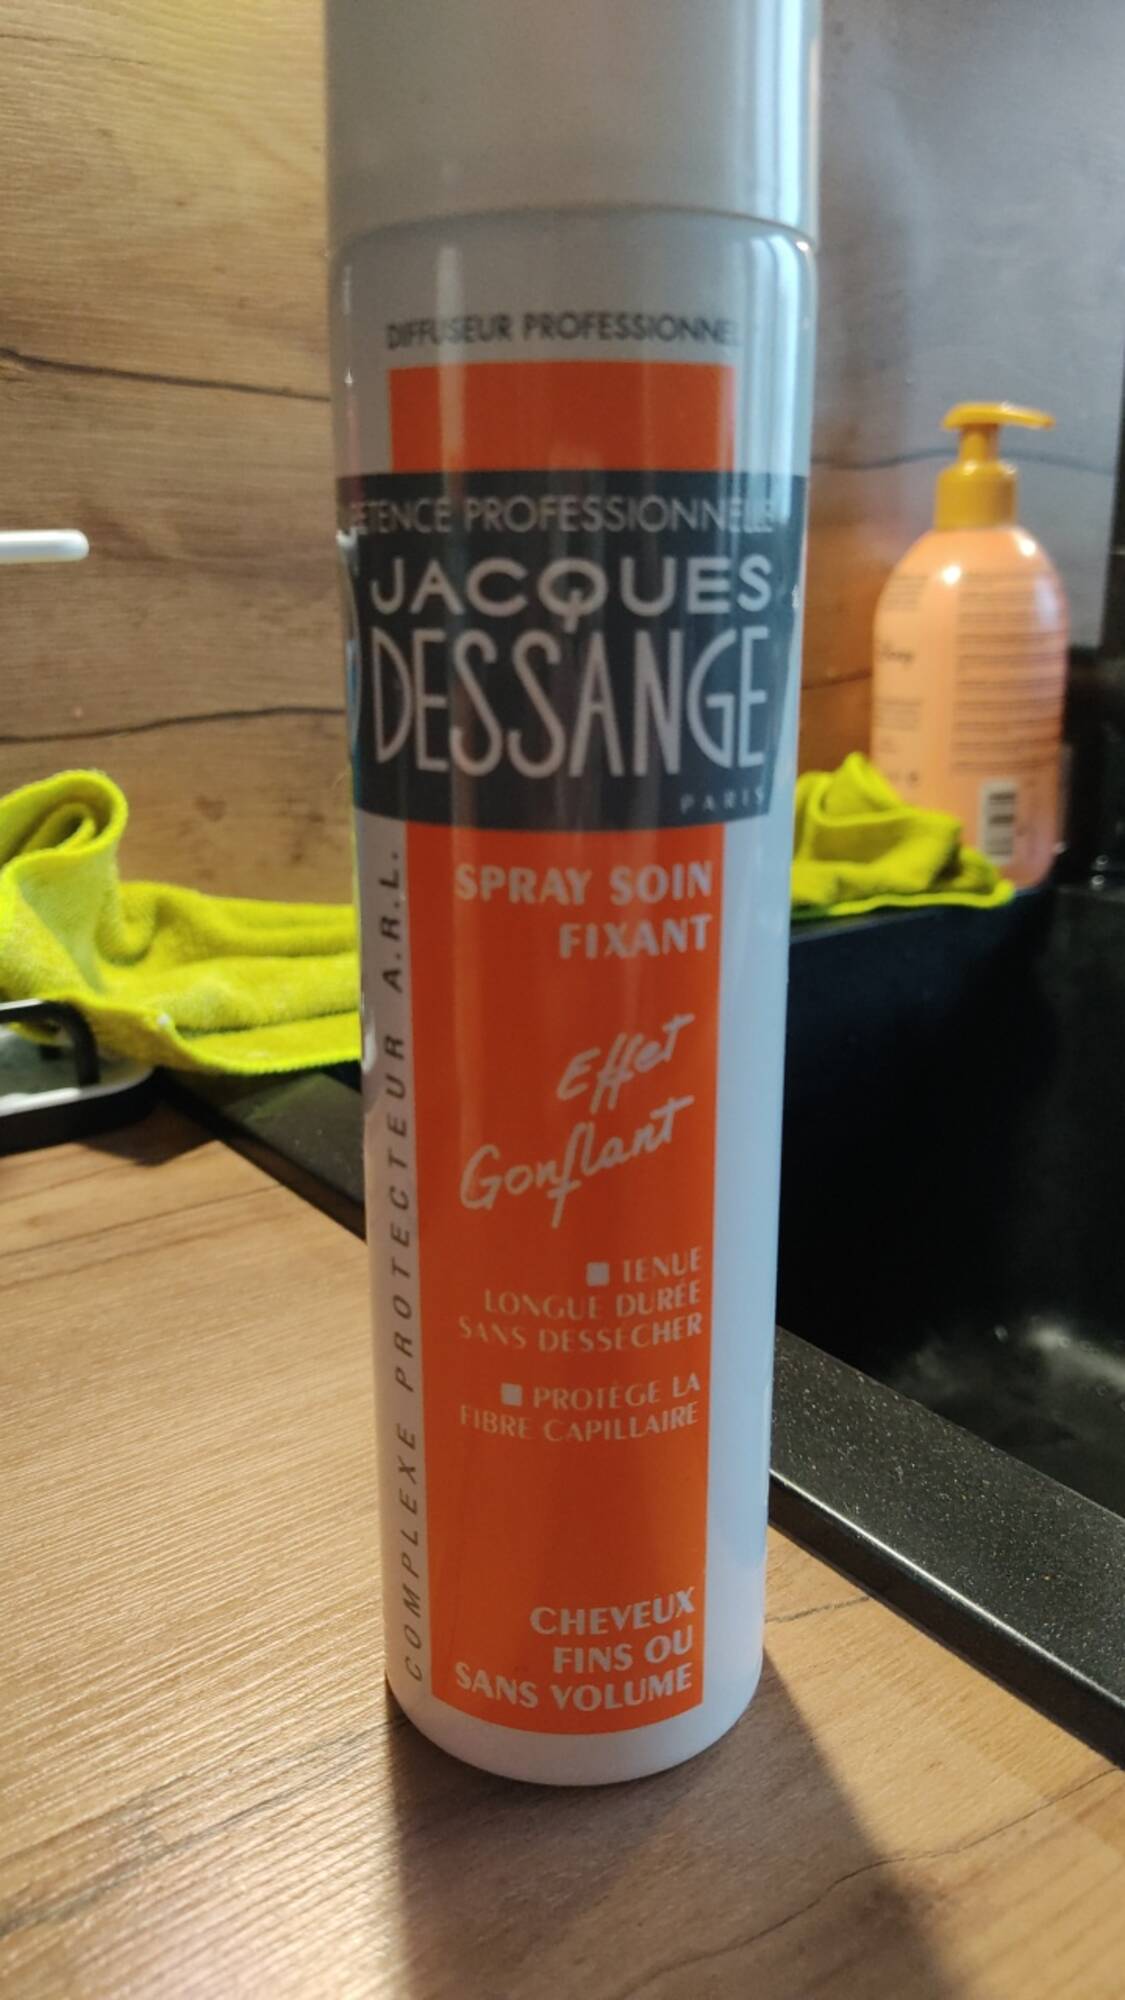 JACQUES DESSANGE - Spray soin fixant effet gonflant